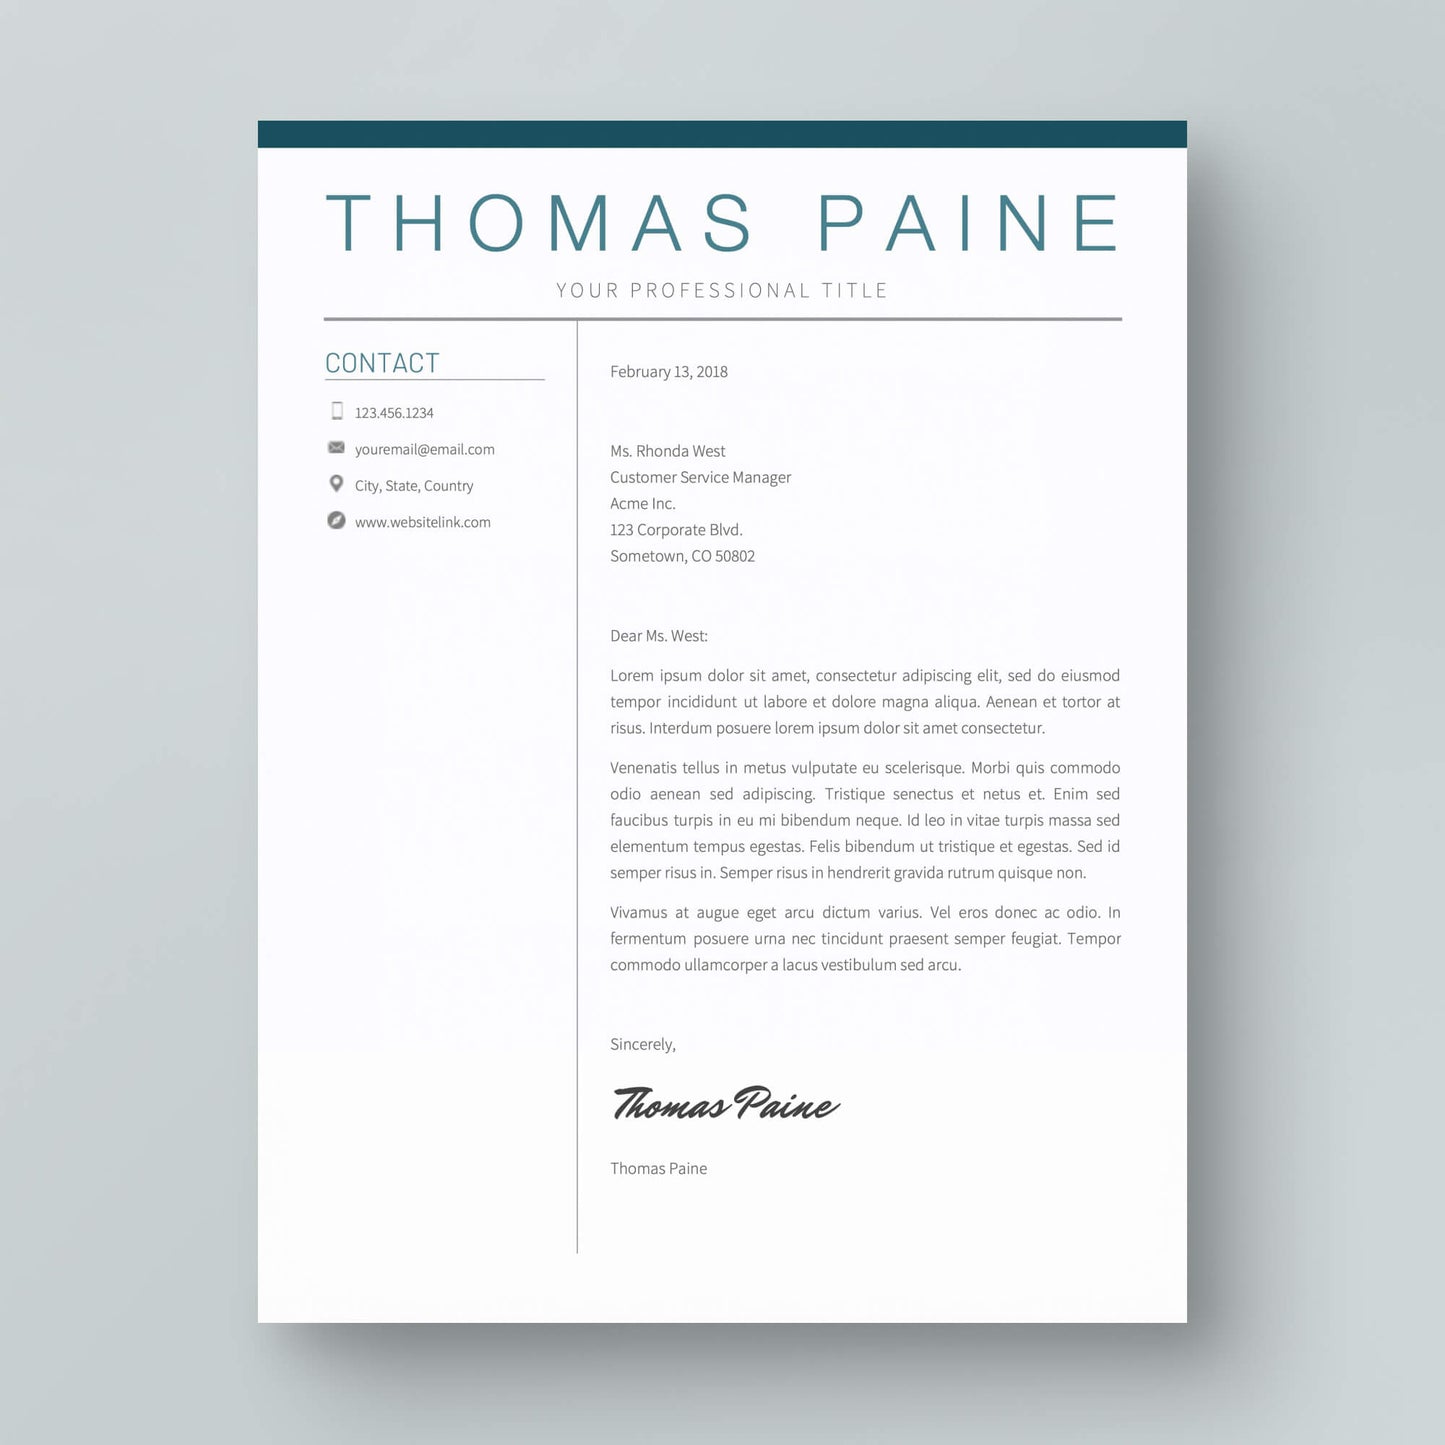 Resume Template: Thomas Paine - MioDocs